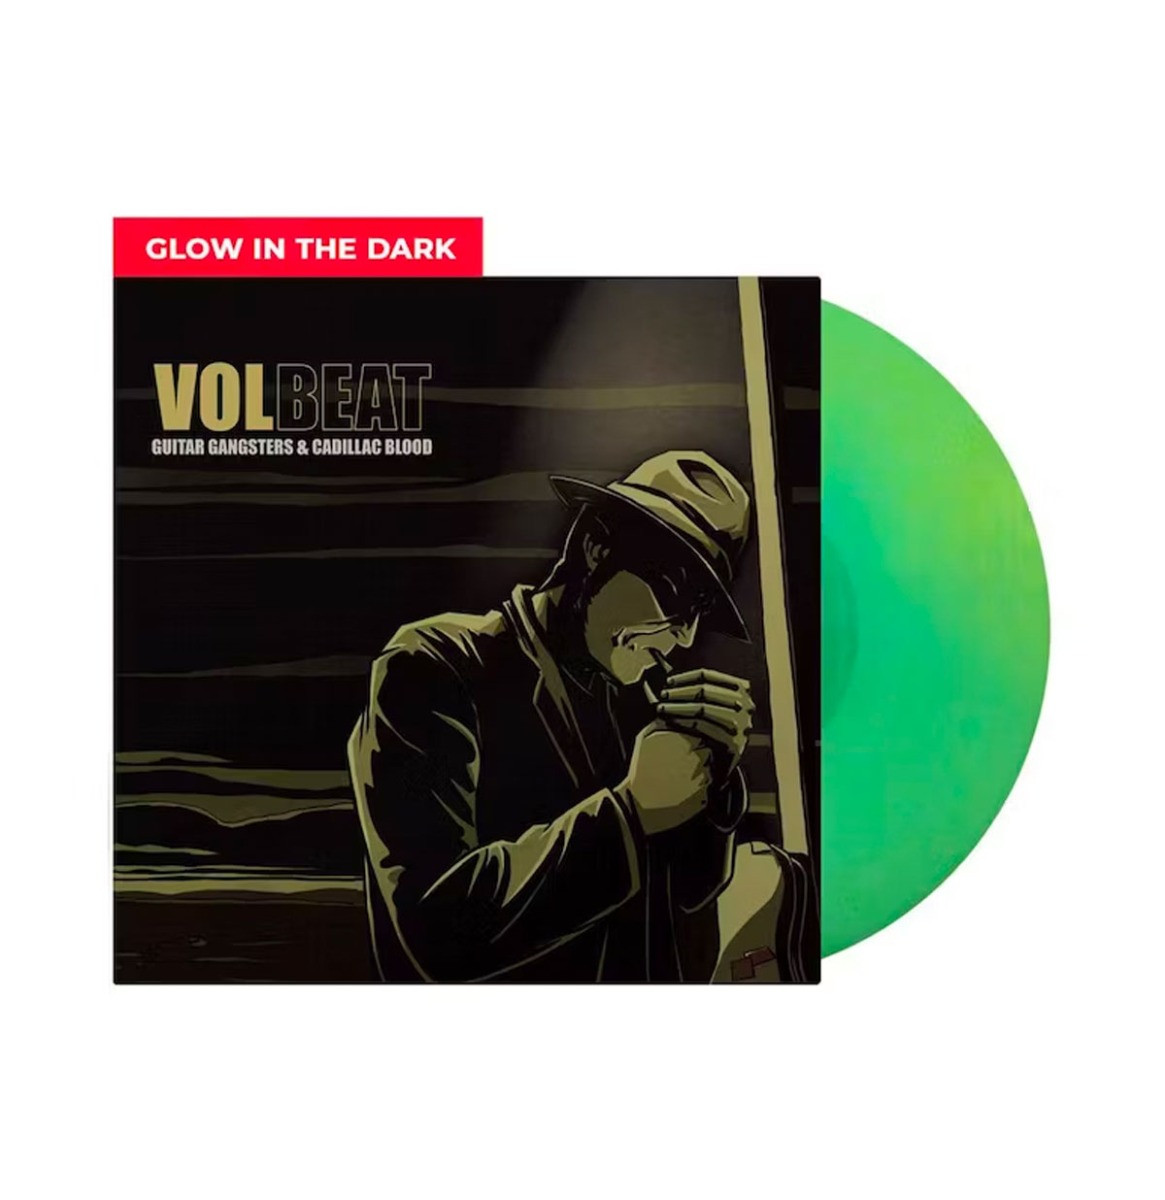 Volbeat - Guitar Gangsters & Cadillac Blood (Glow In The Dark Vinyl) LP